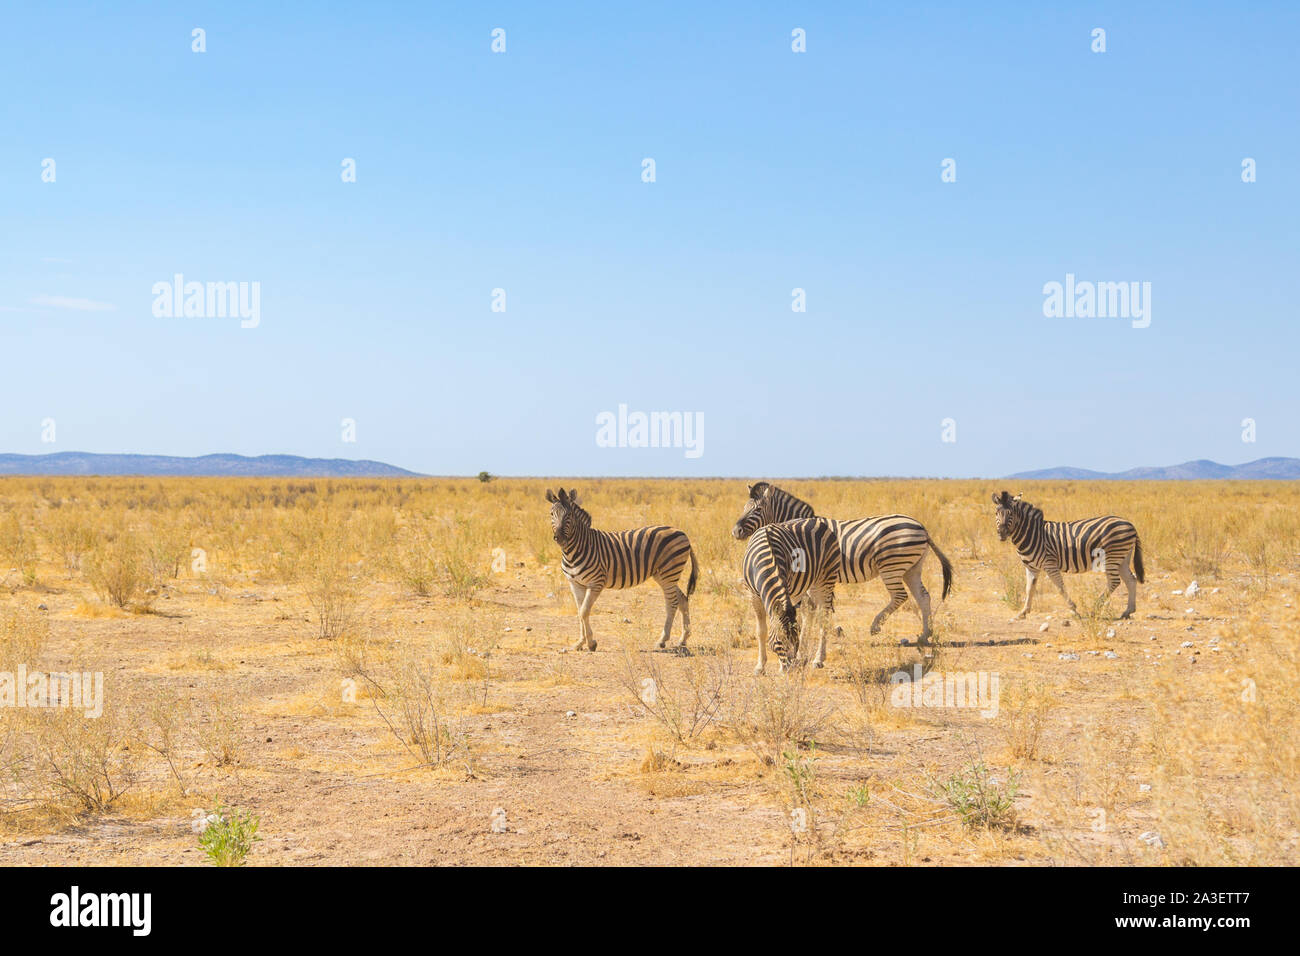 group of four wildlife zebras in natural grassland habitat, blue sky Stock Photo